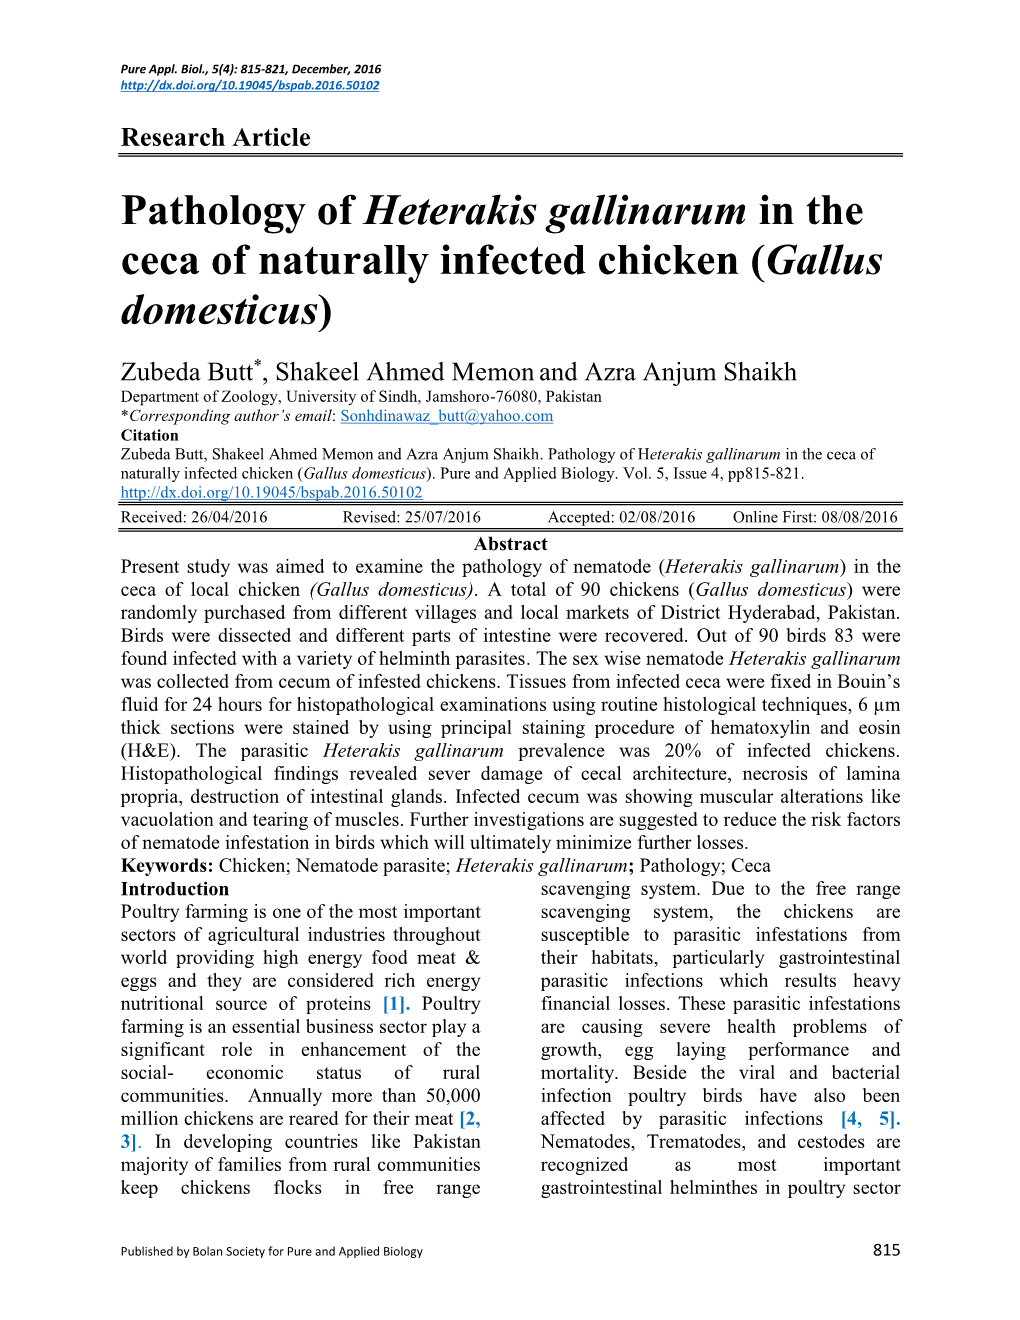 Pathology of Heterakis Gallinarum in the Ceca of Naturally Infected Chicken (Gallus Domesticus)